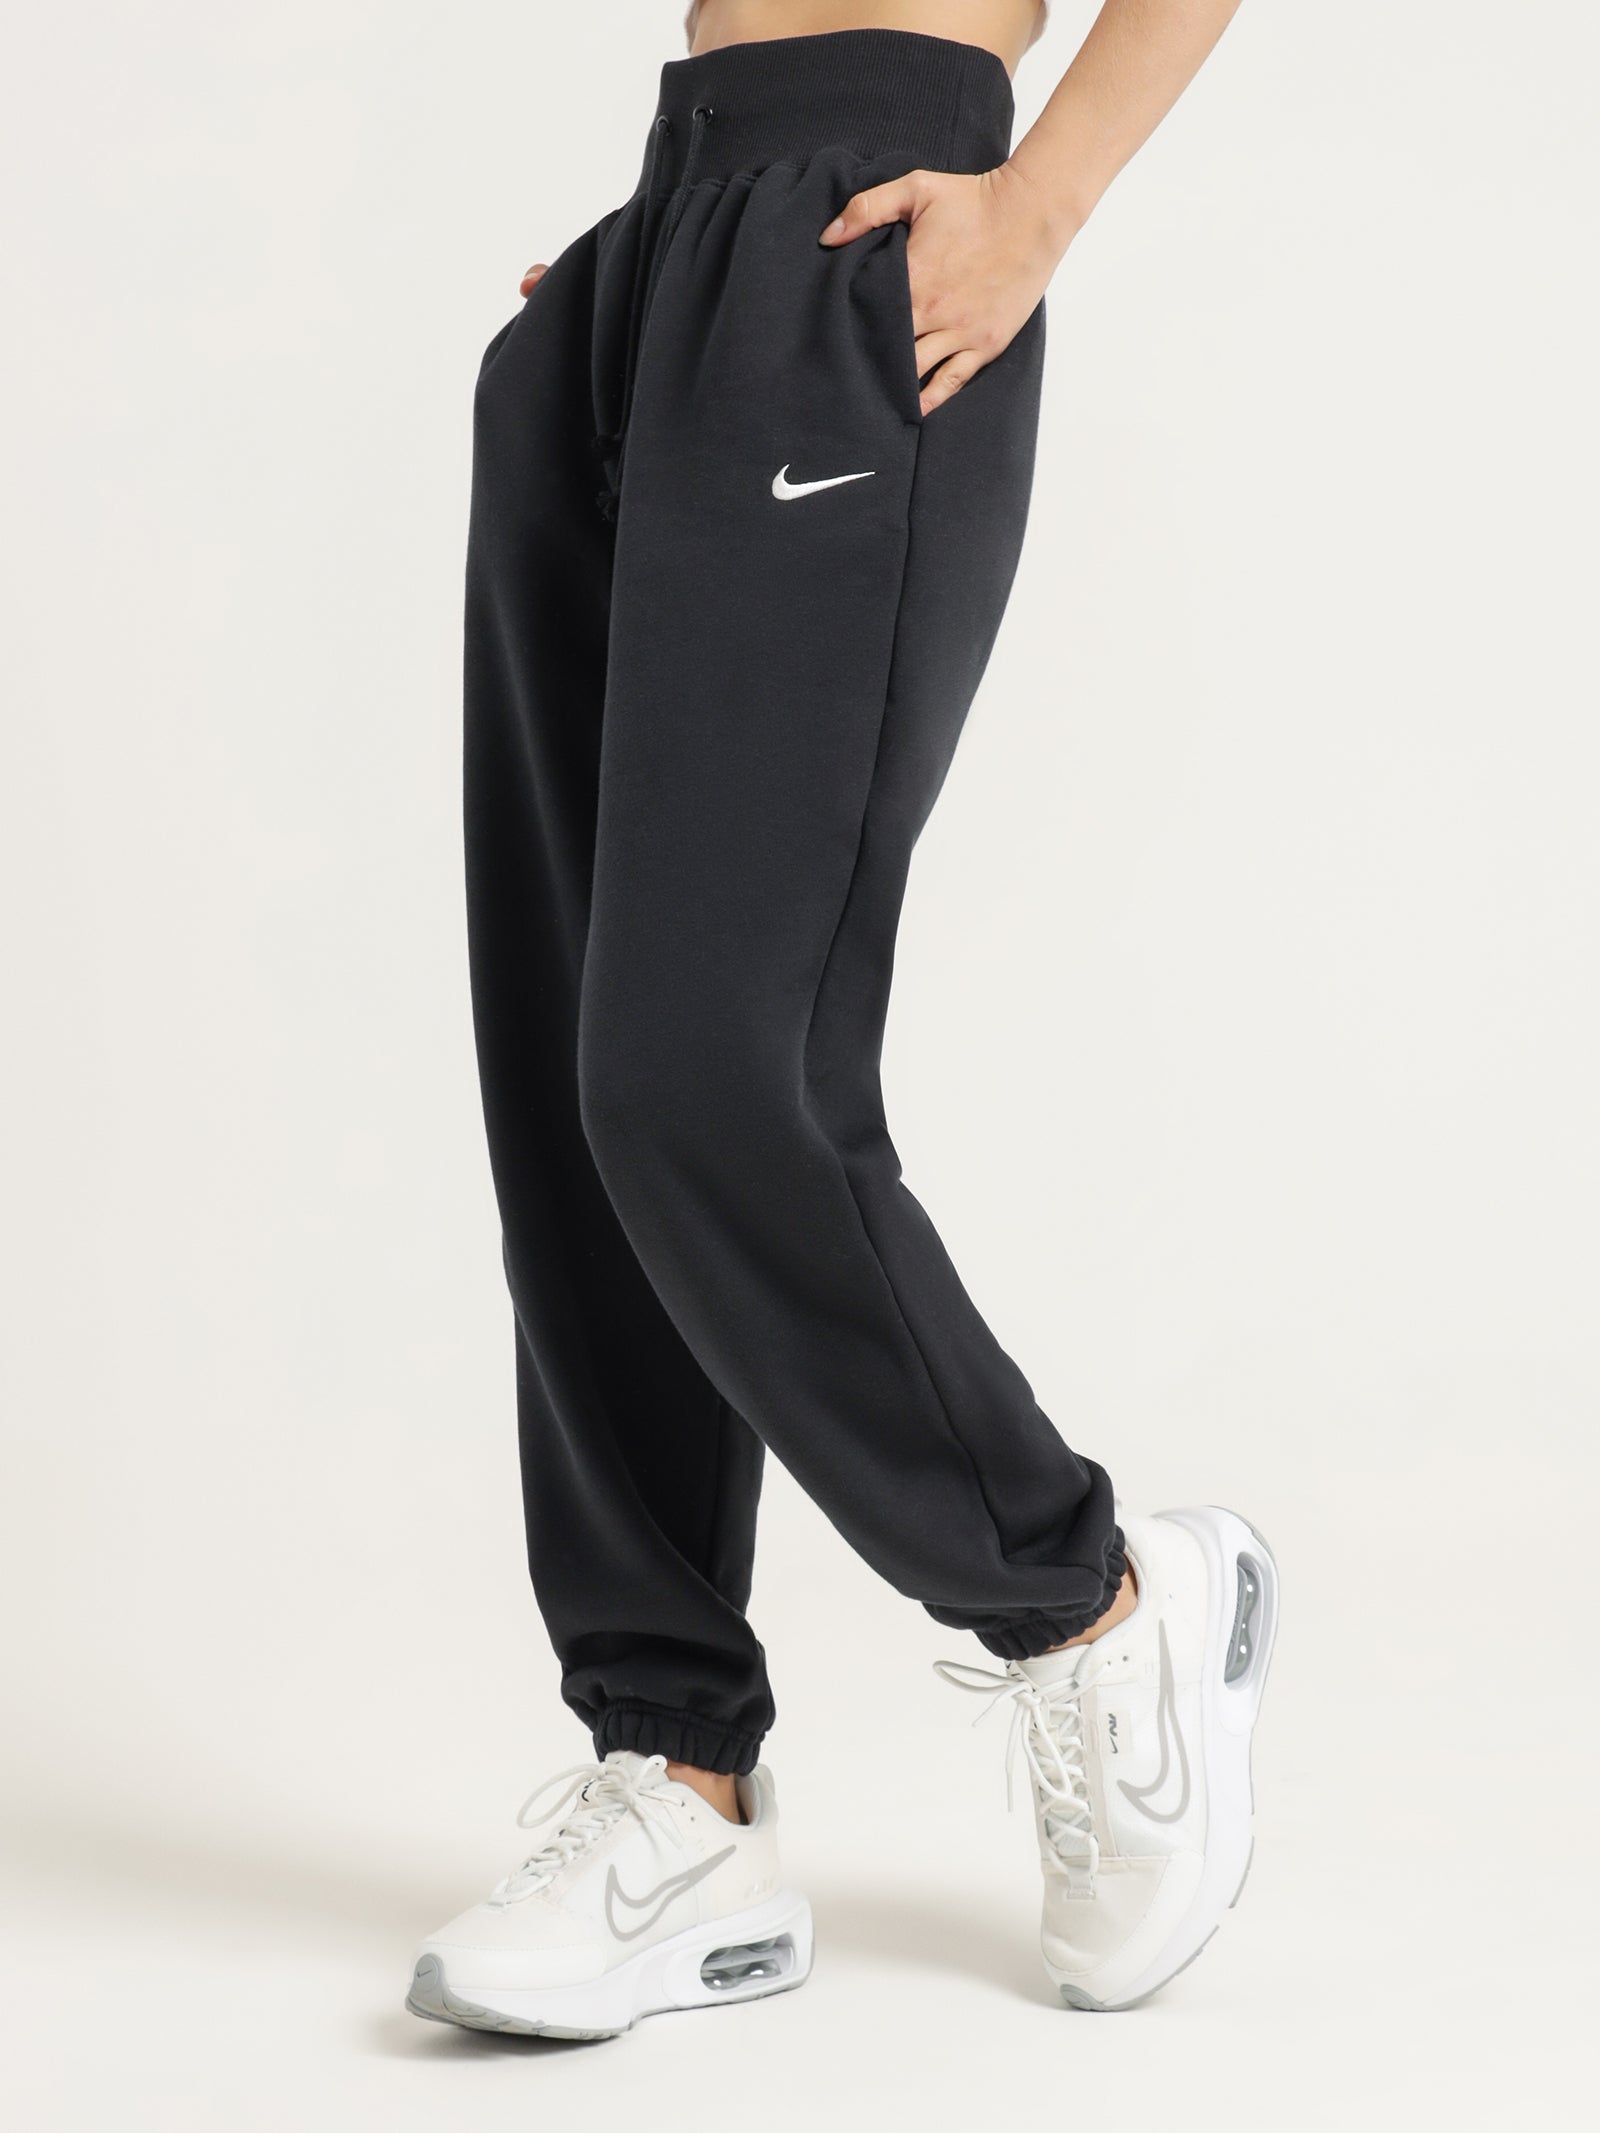 Jeans & Pants | Nike - (DRI-FIT) Track Pant | Freeup